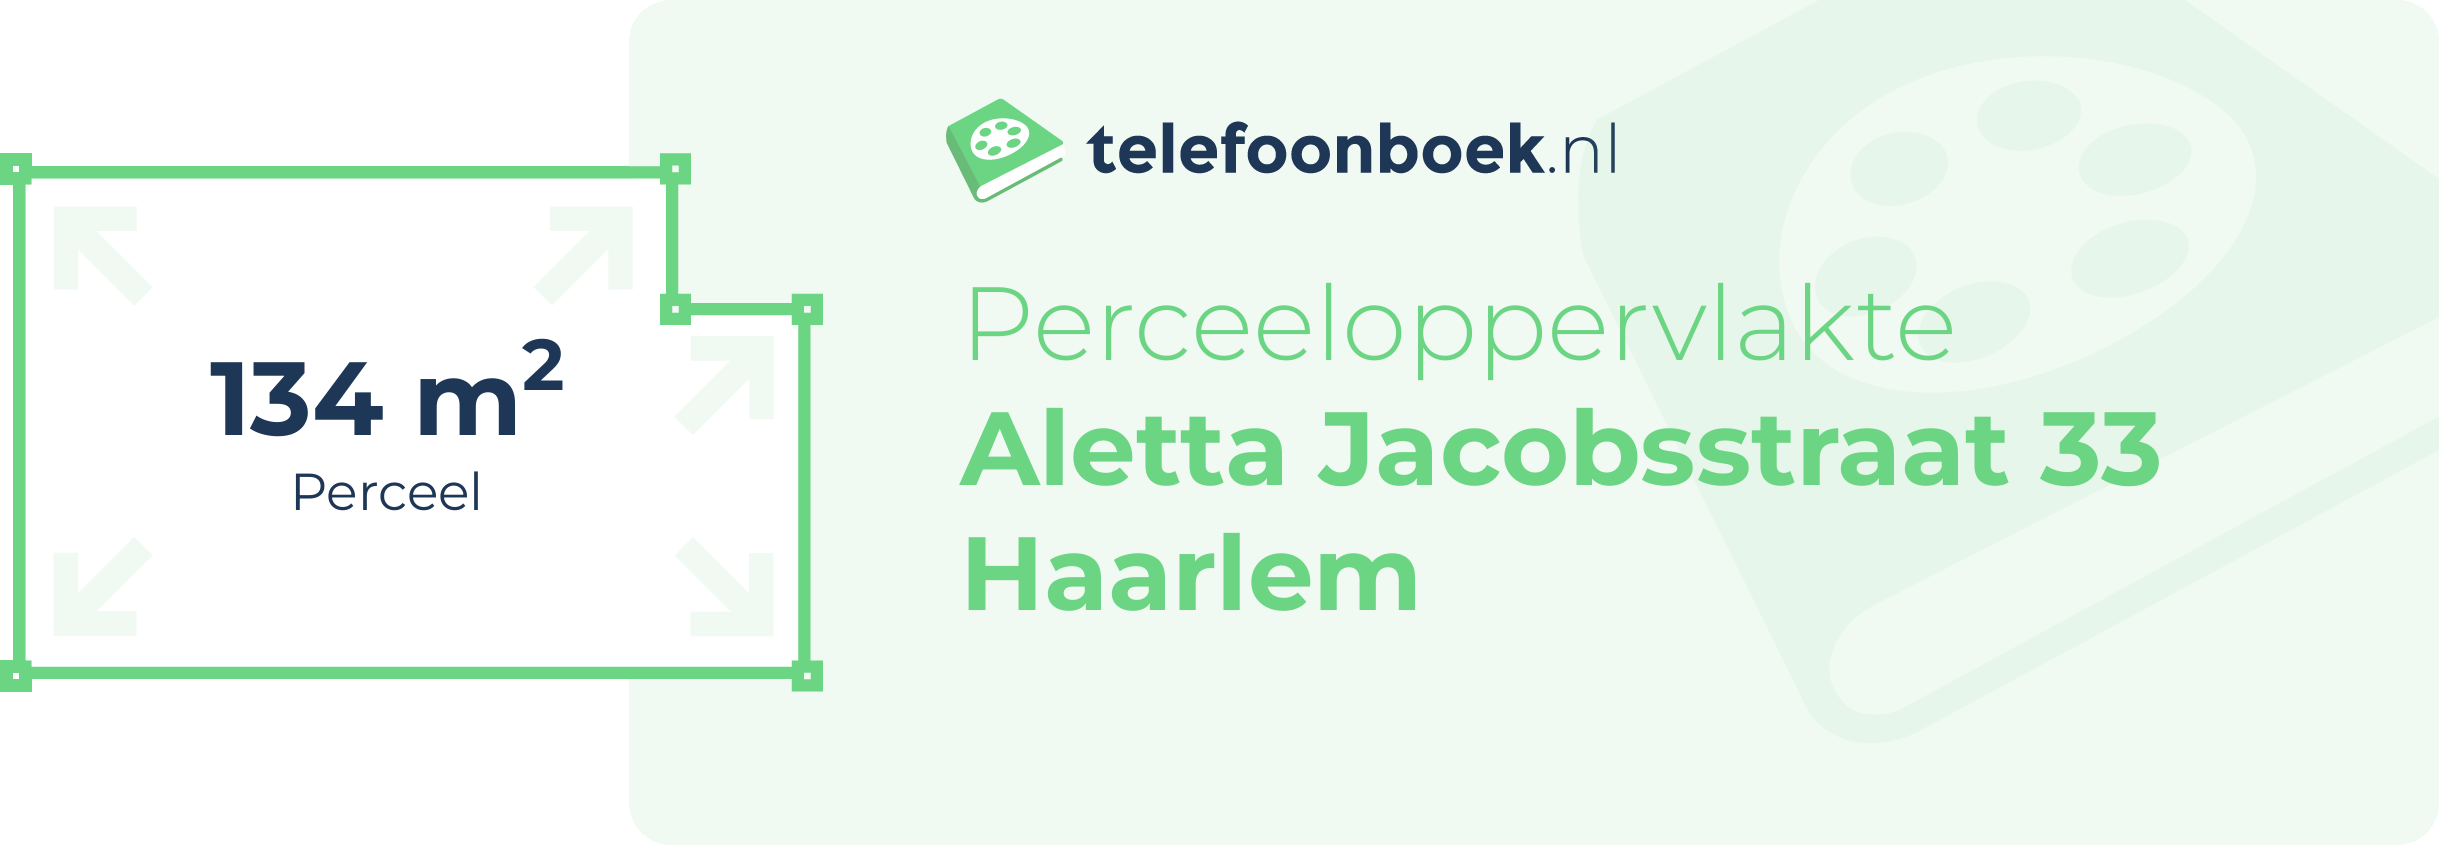 Perceeloppervlakte Aletta Jacobsstraat 33 Haarlem